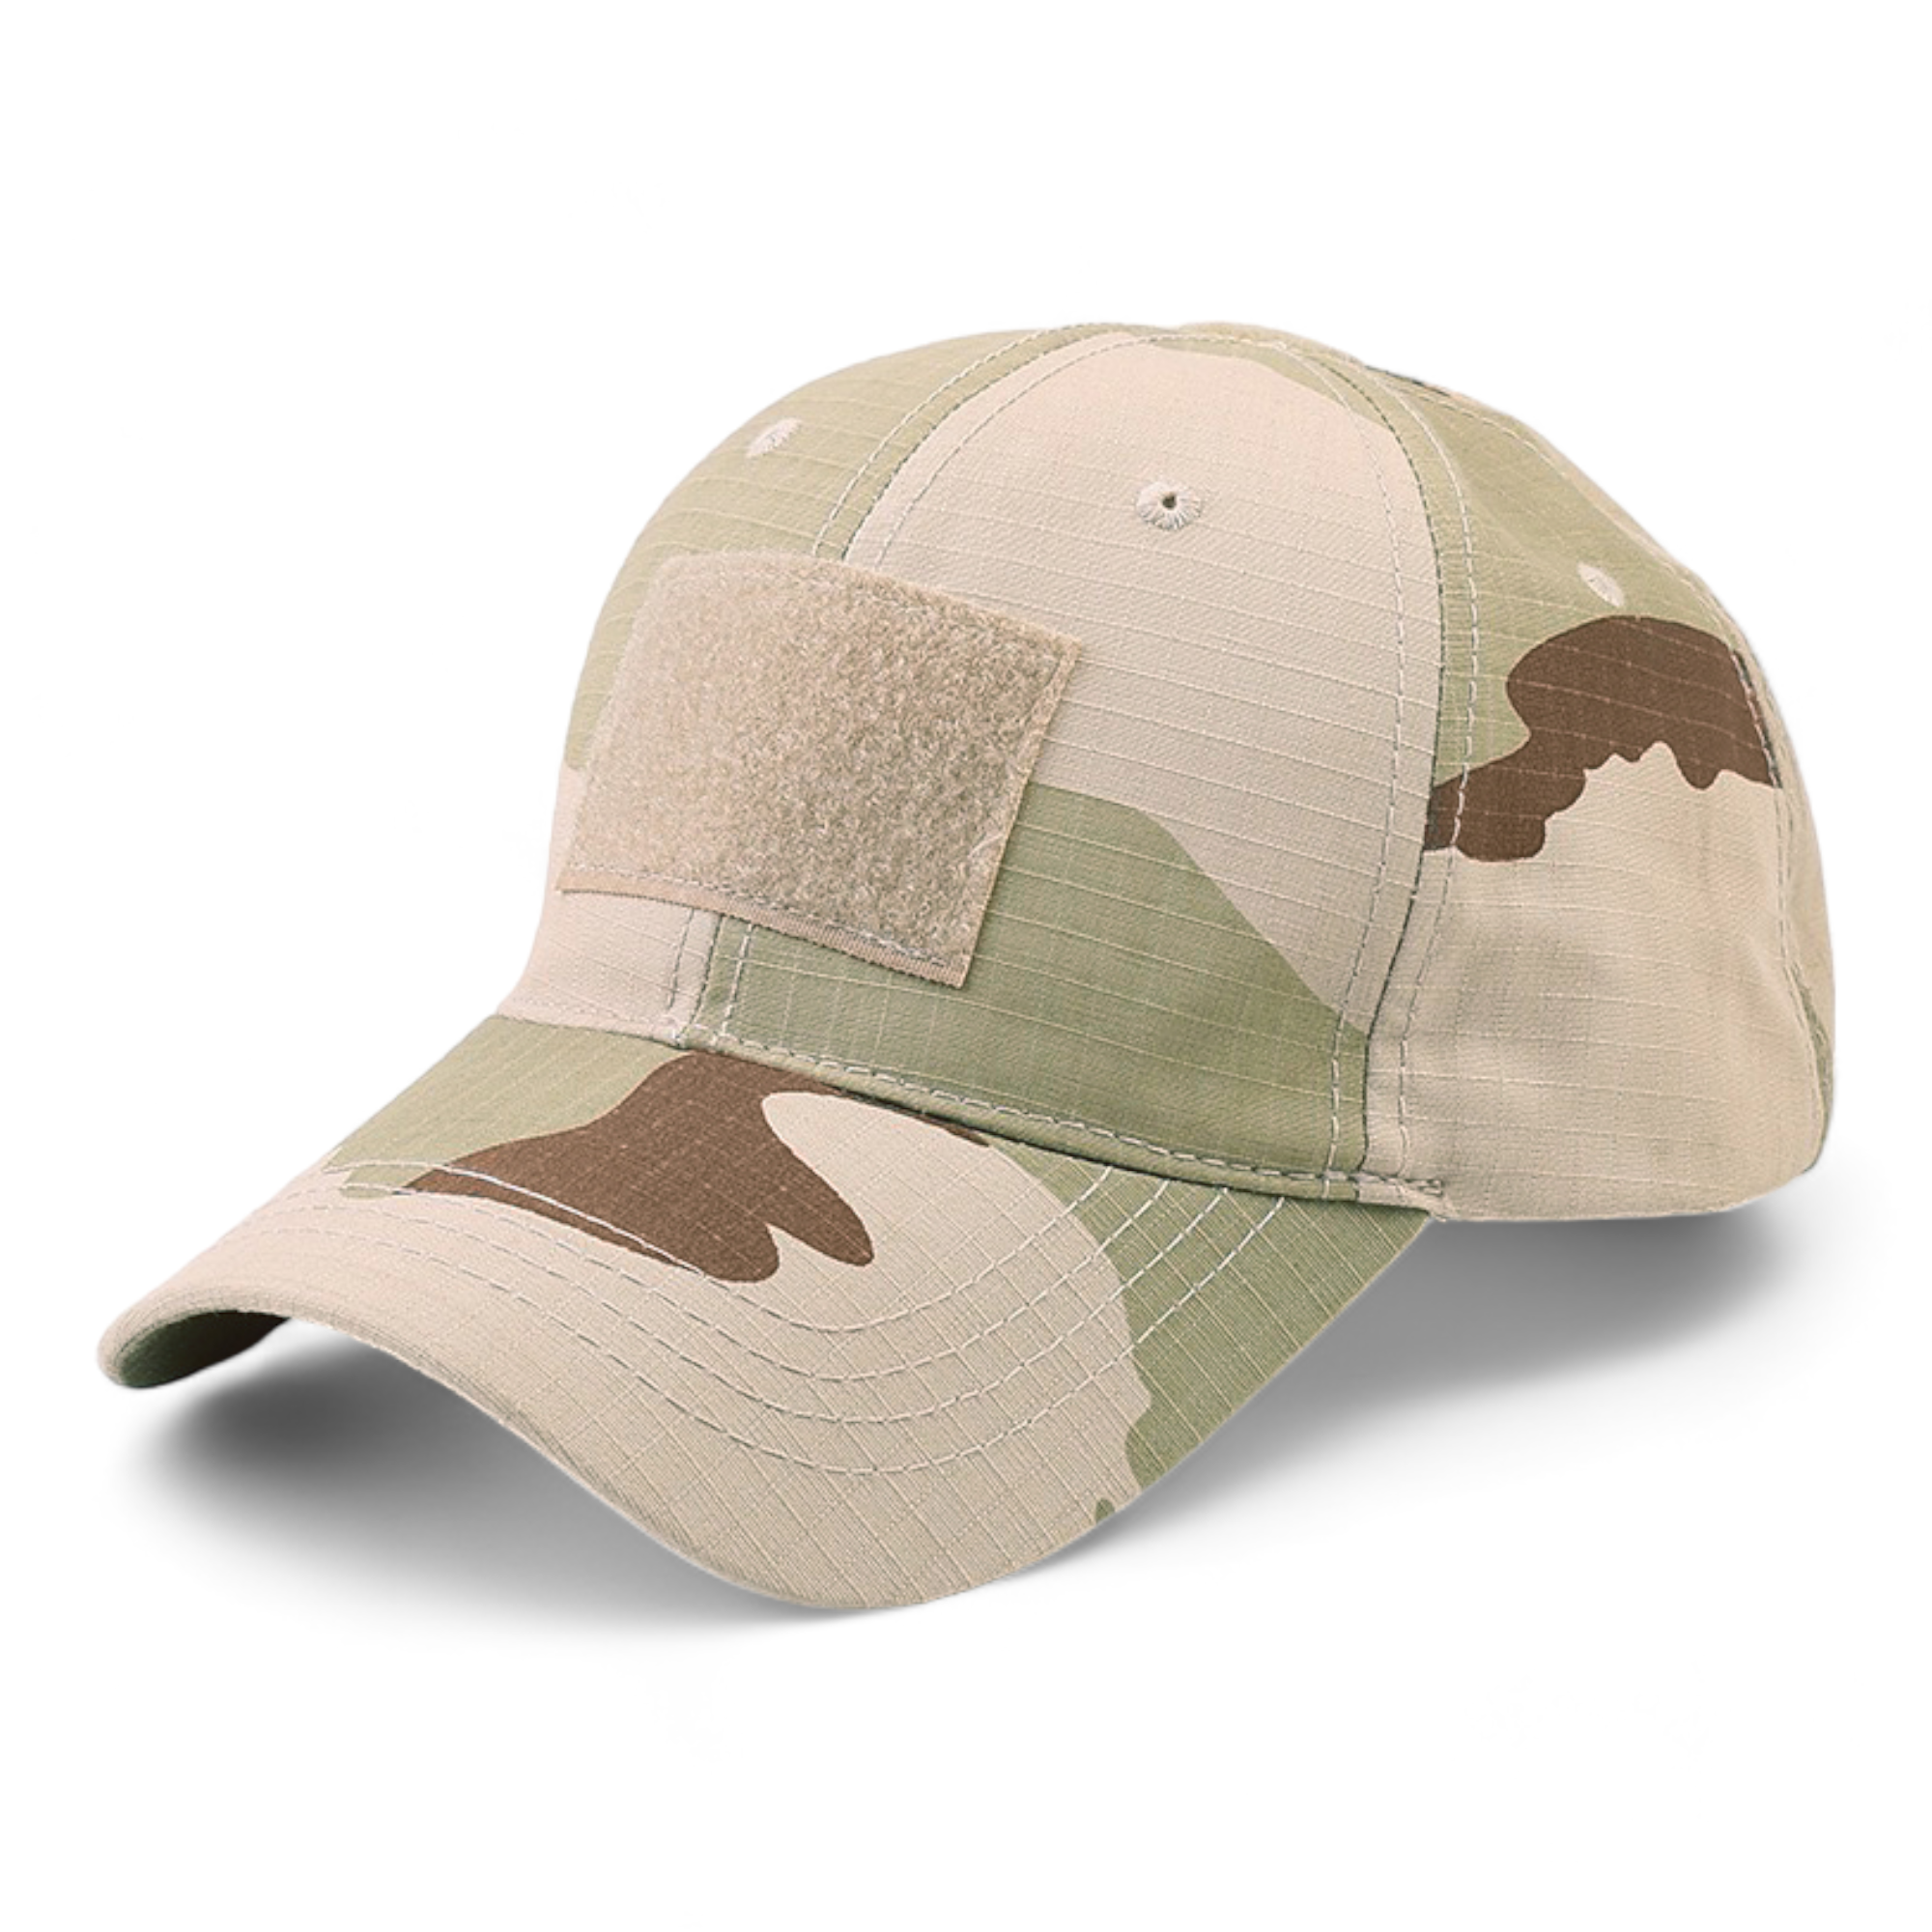 Chokore Camouflage Sports Cap (Beige)